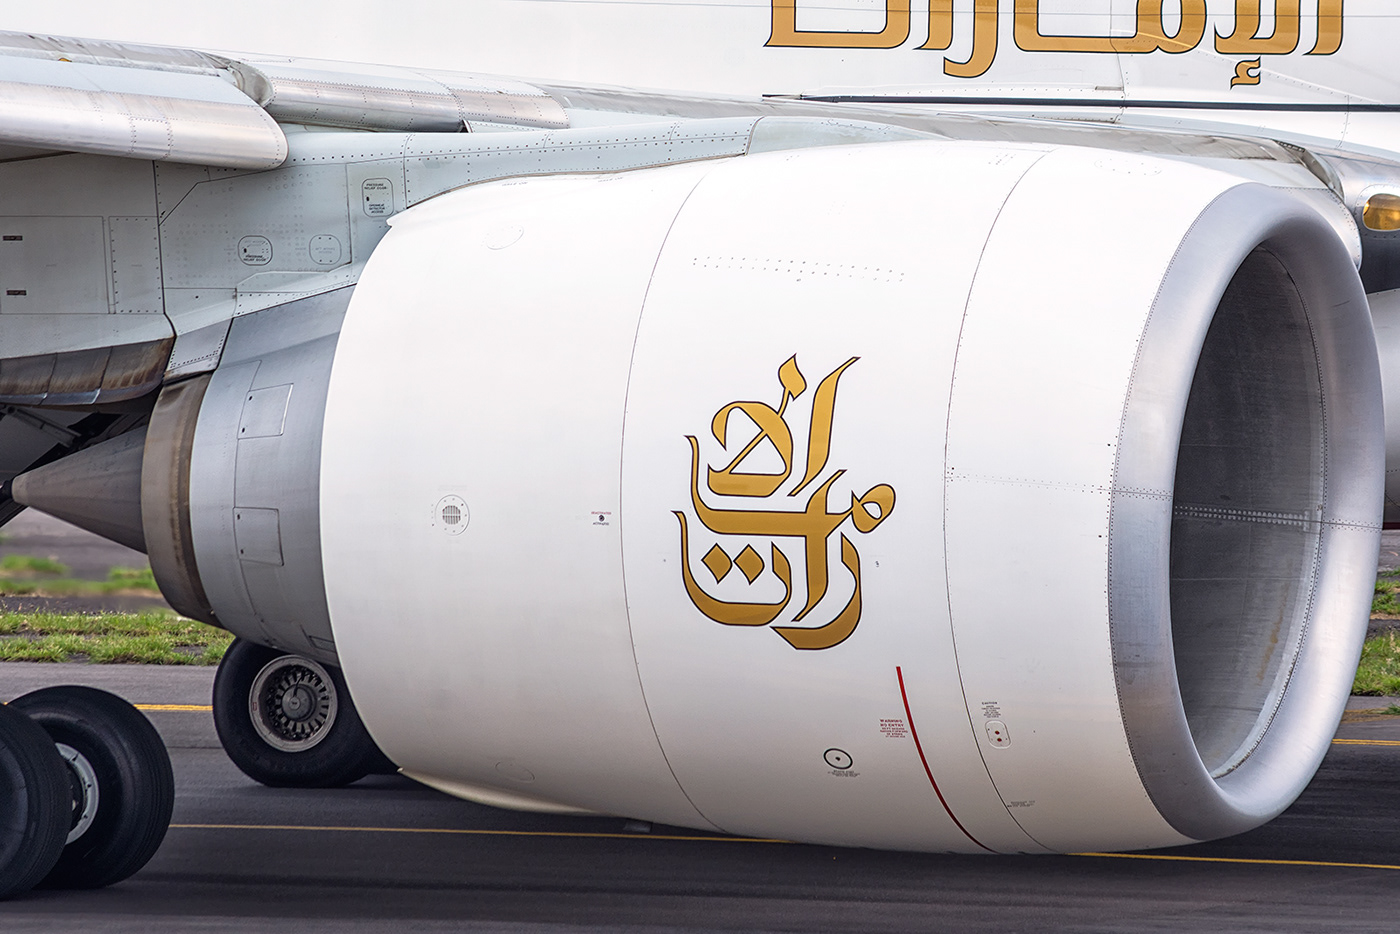 aerolinea aeronave aviacion avion Boeing emirates emirates sky cargo mexico transporte